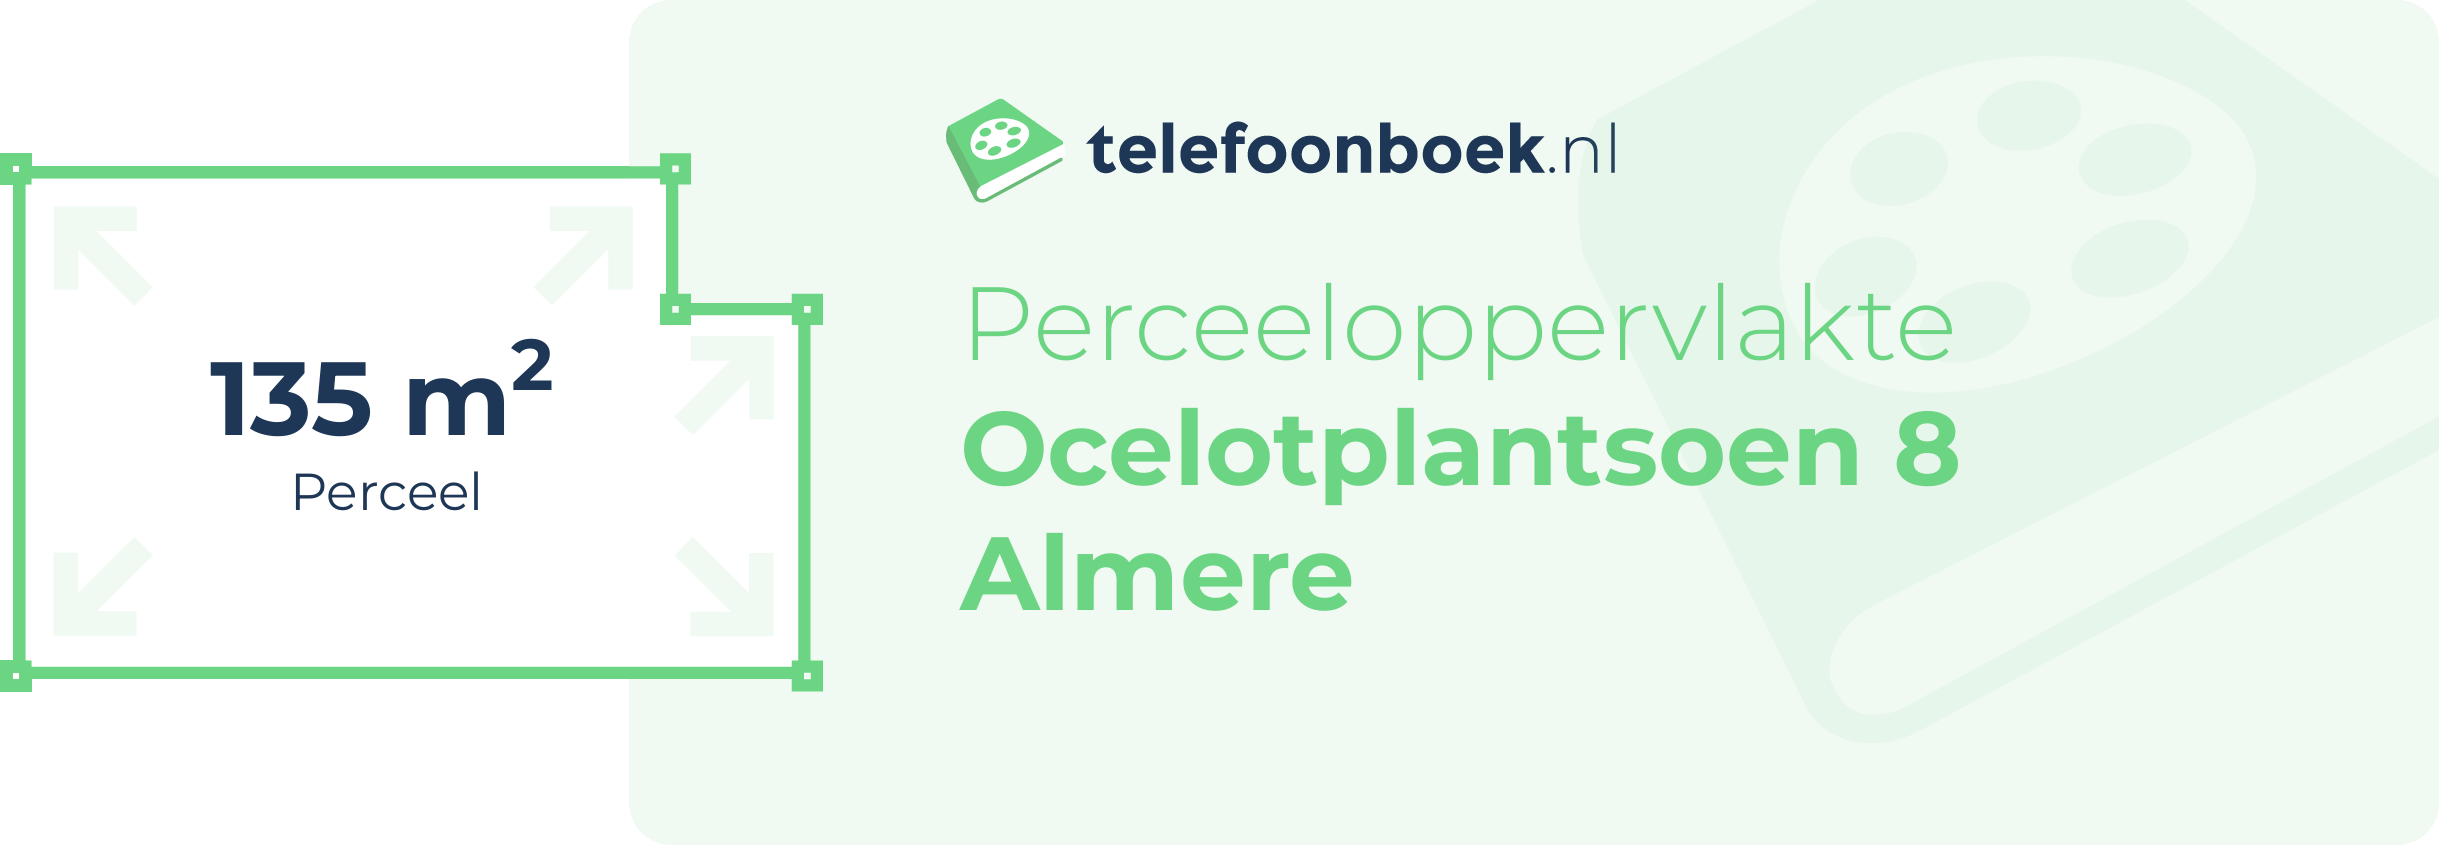 Perceeloppervlakte Ocelotplantsoen 8 Almere